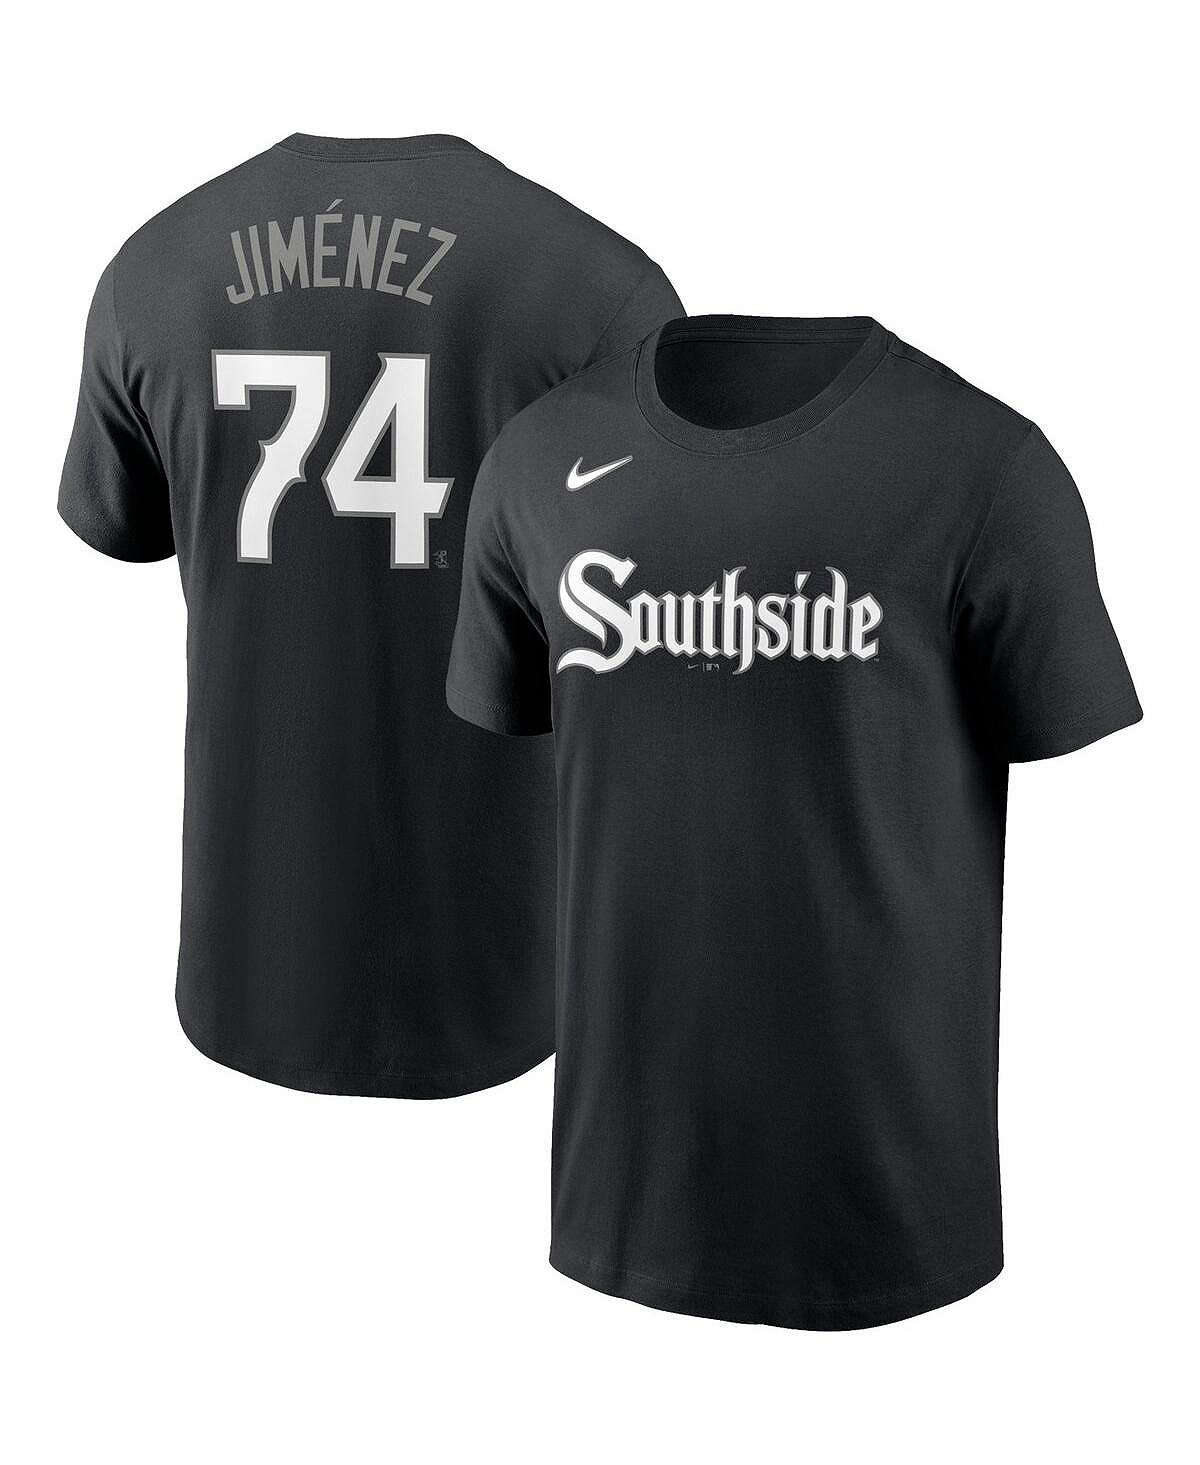 Мужская футболка Eloy Jimenez Black Chicago White Sox City Connect с именем и номером Nike носки nike fc barcelona snkr sox размер 34 38